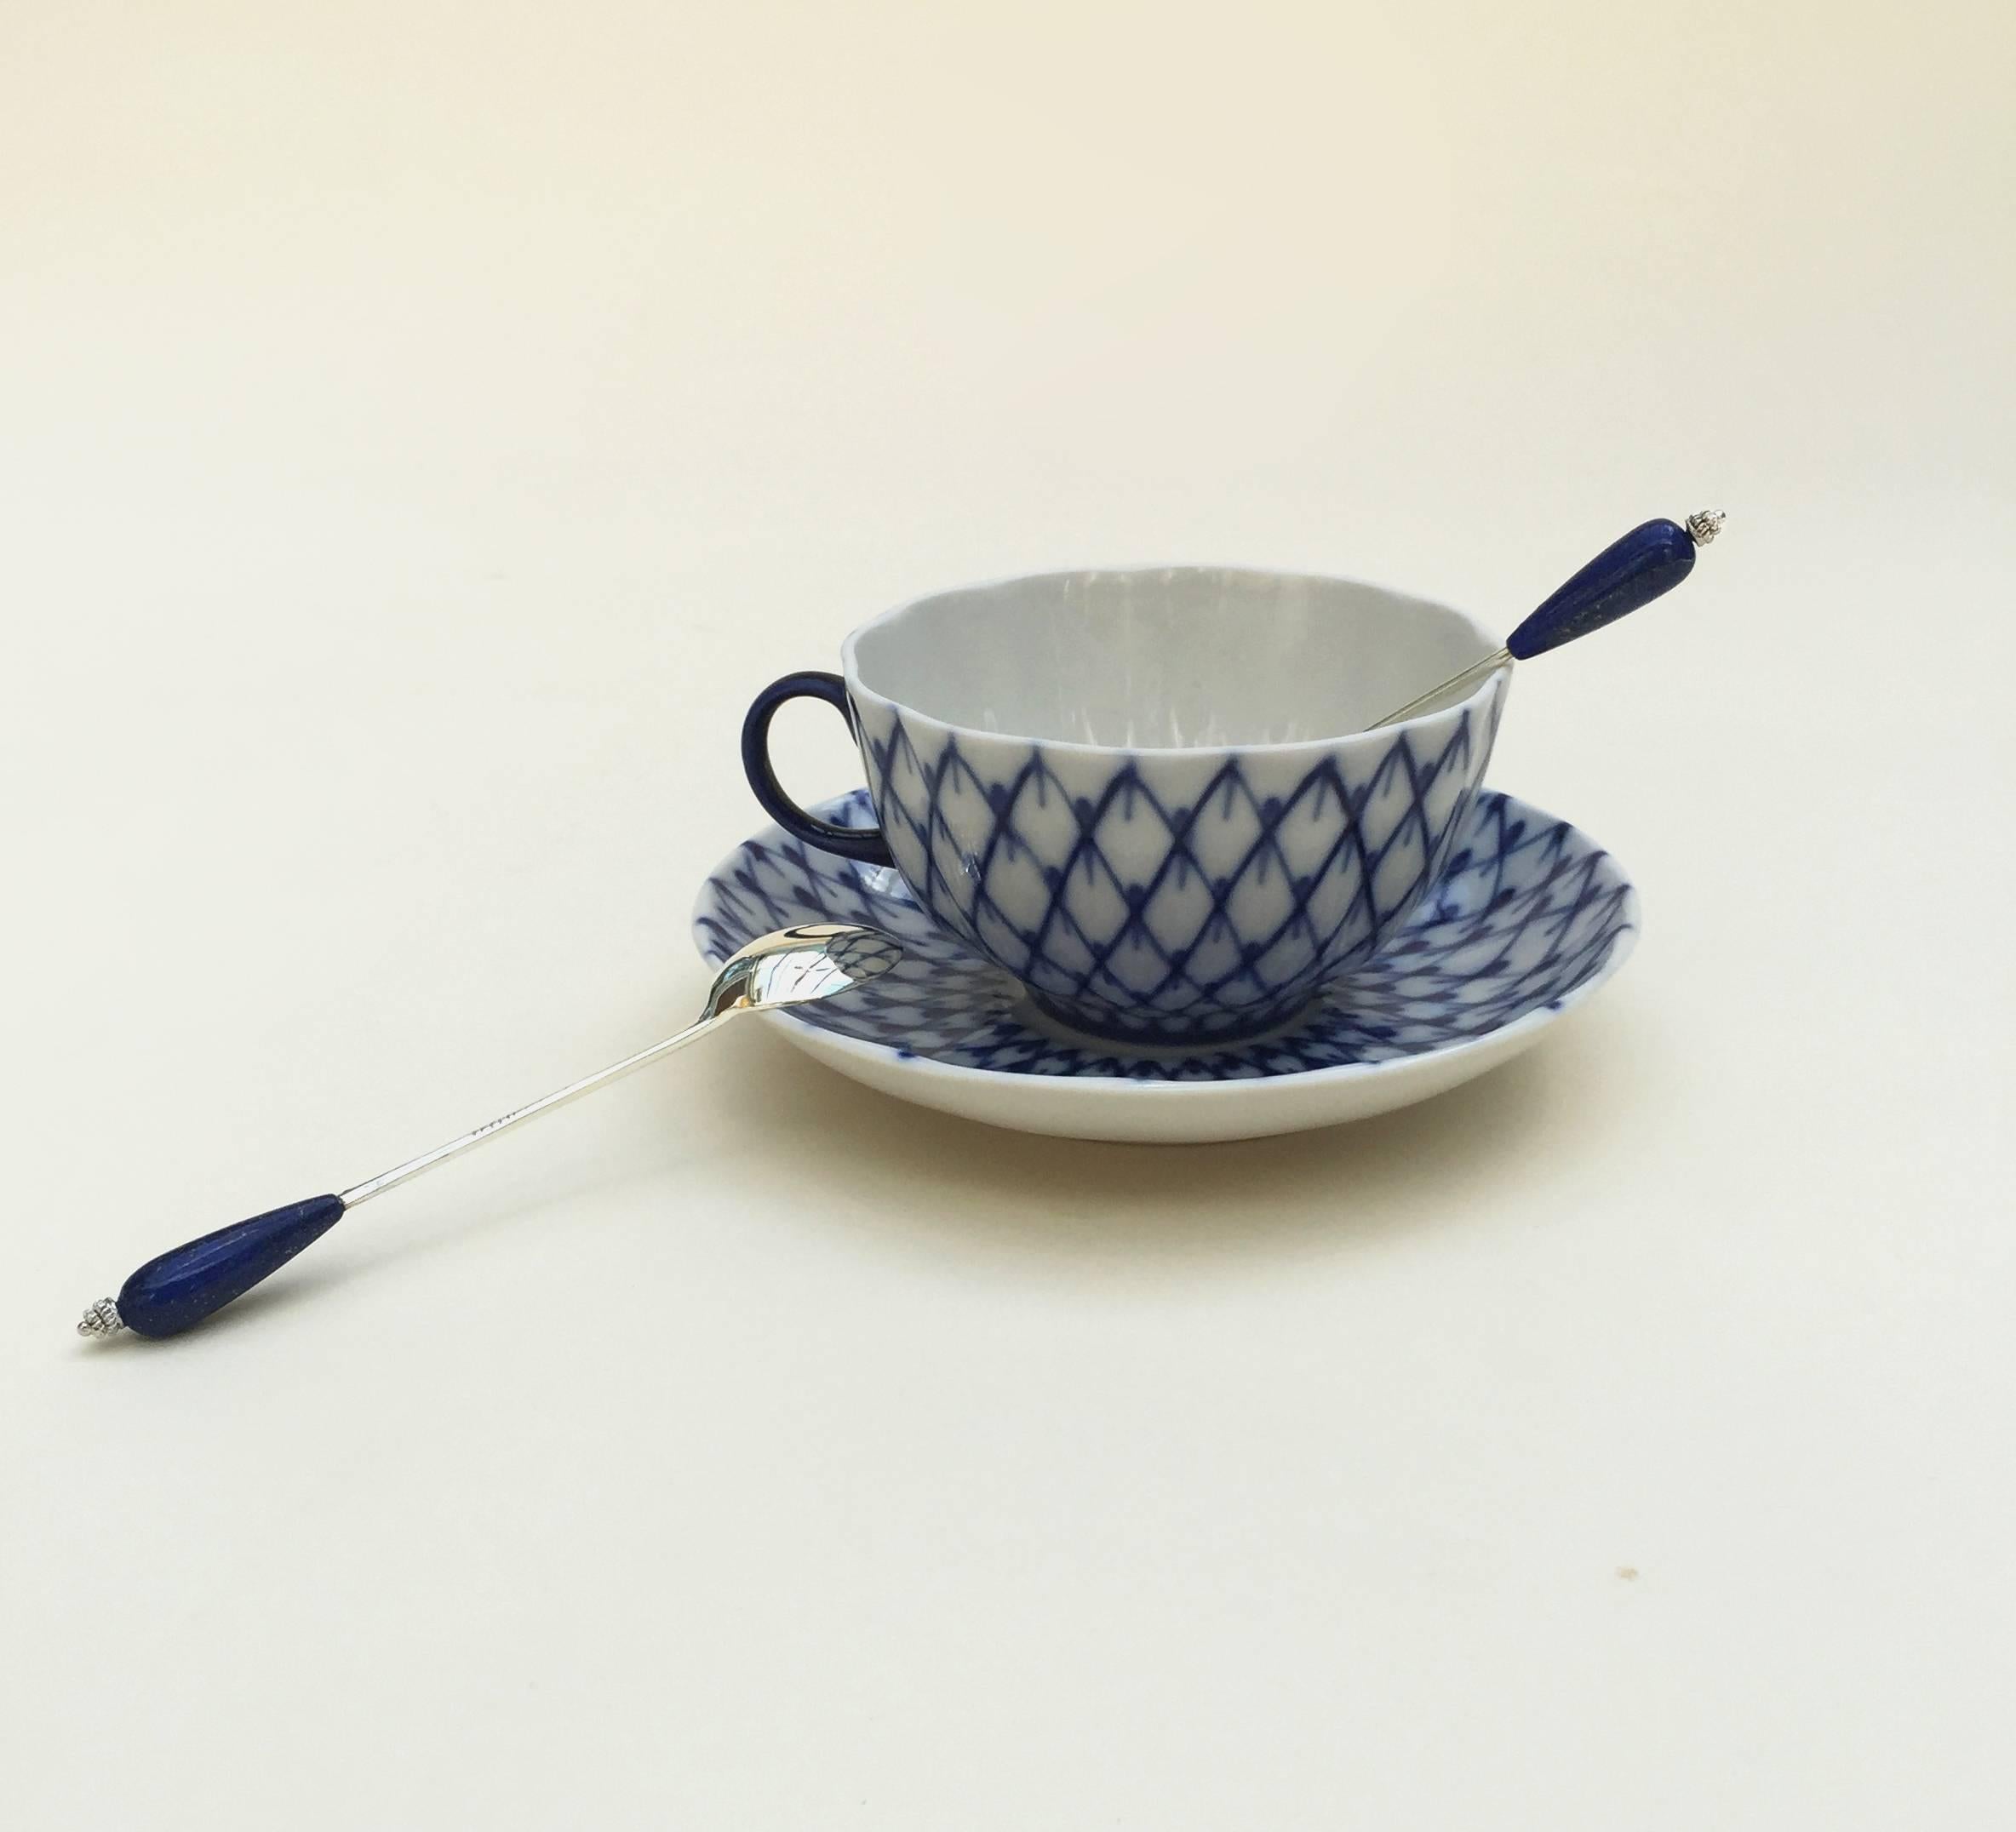 Artist Six English Silver Plated Tea Spoon Set with Lapis Lazuli by Marina J